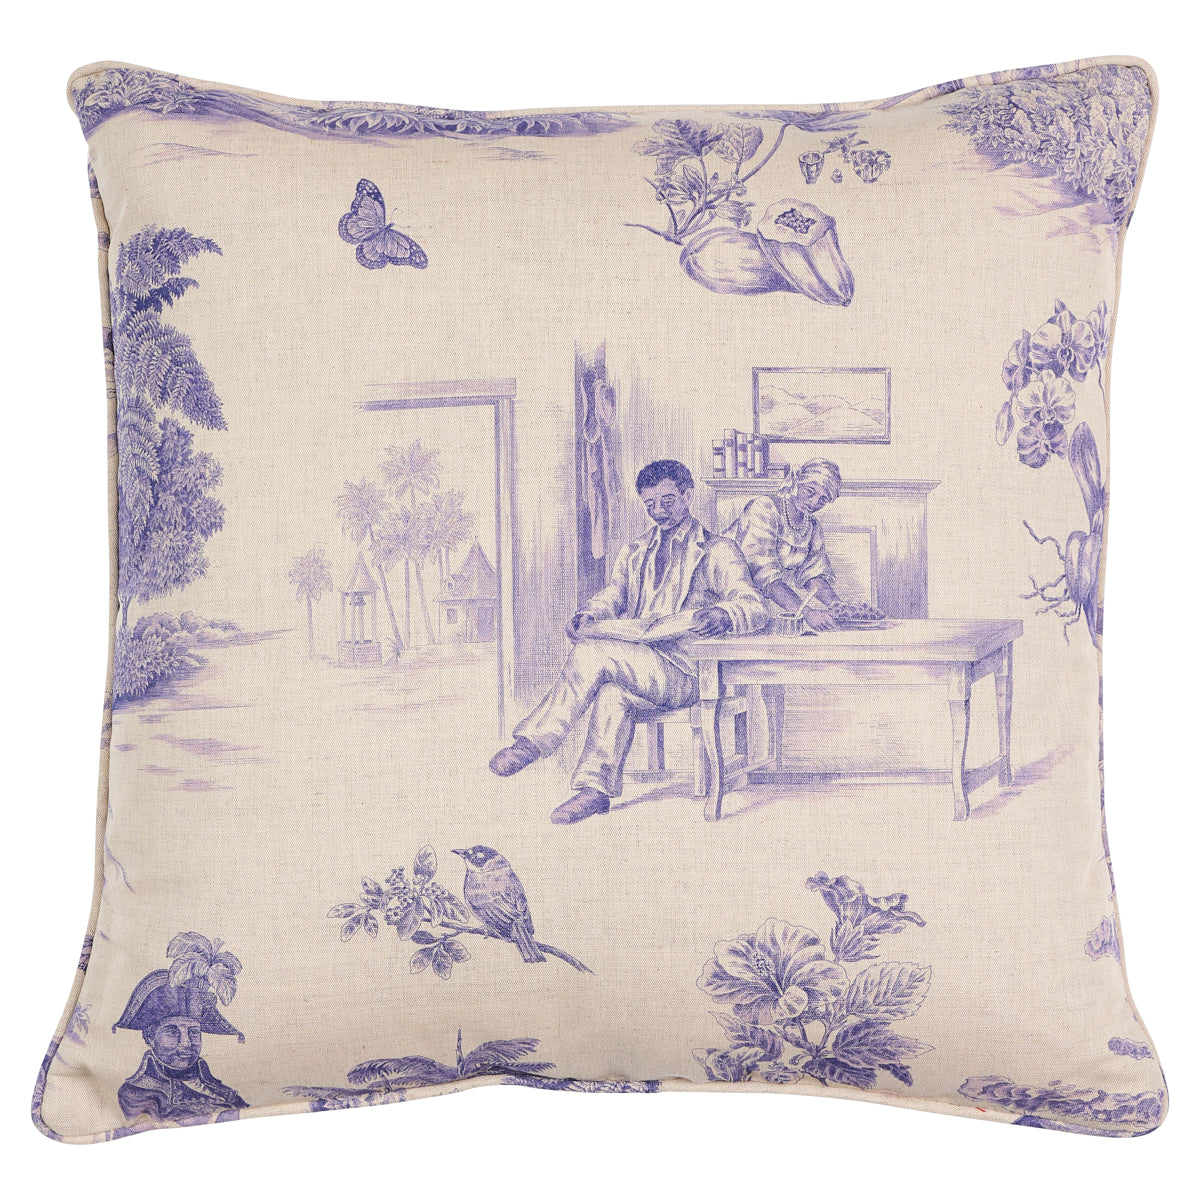 Purchase So18027205 | Toussaint Toile Pillow, Purple - Schumacher Pillows